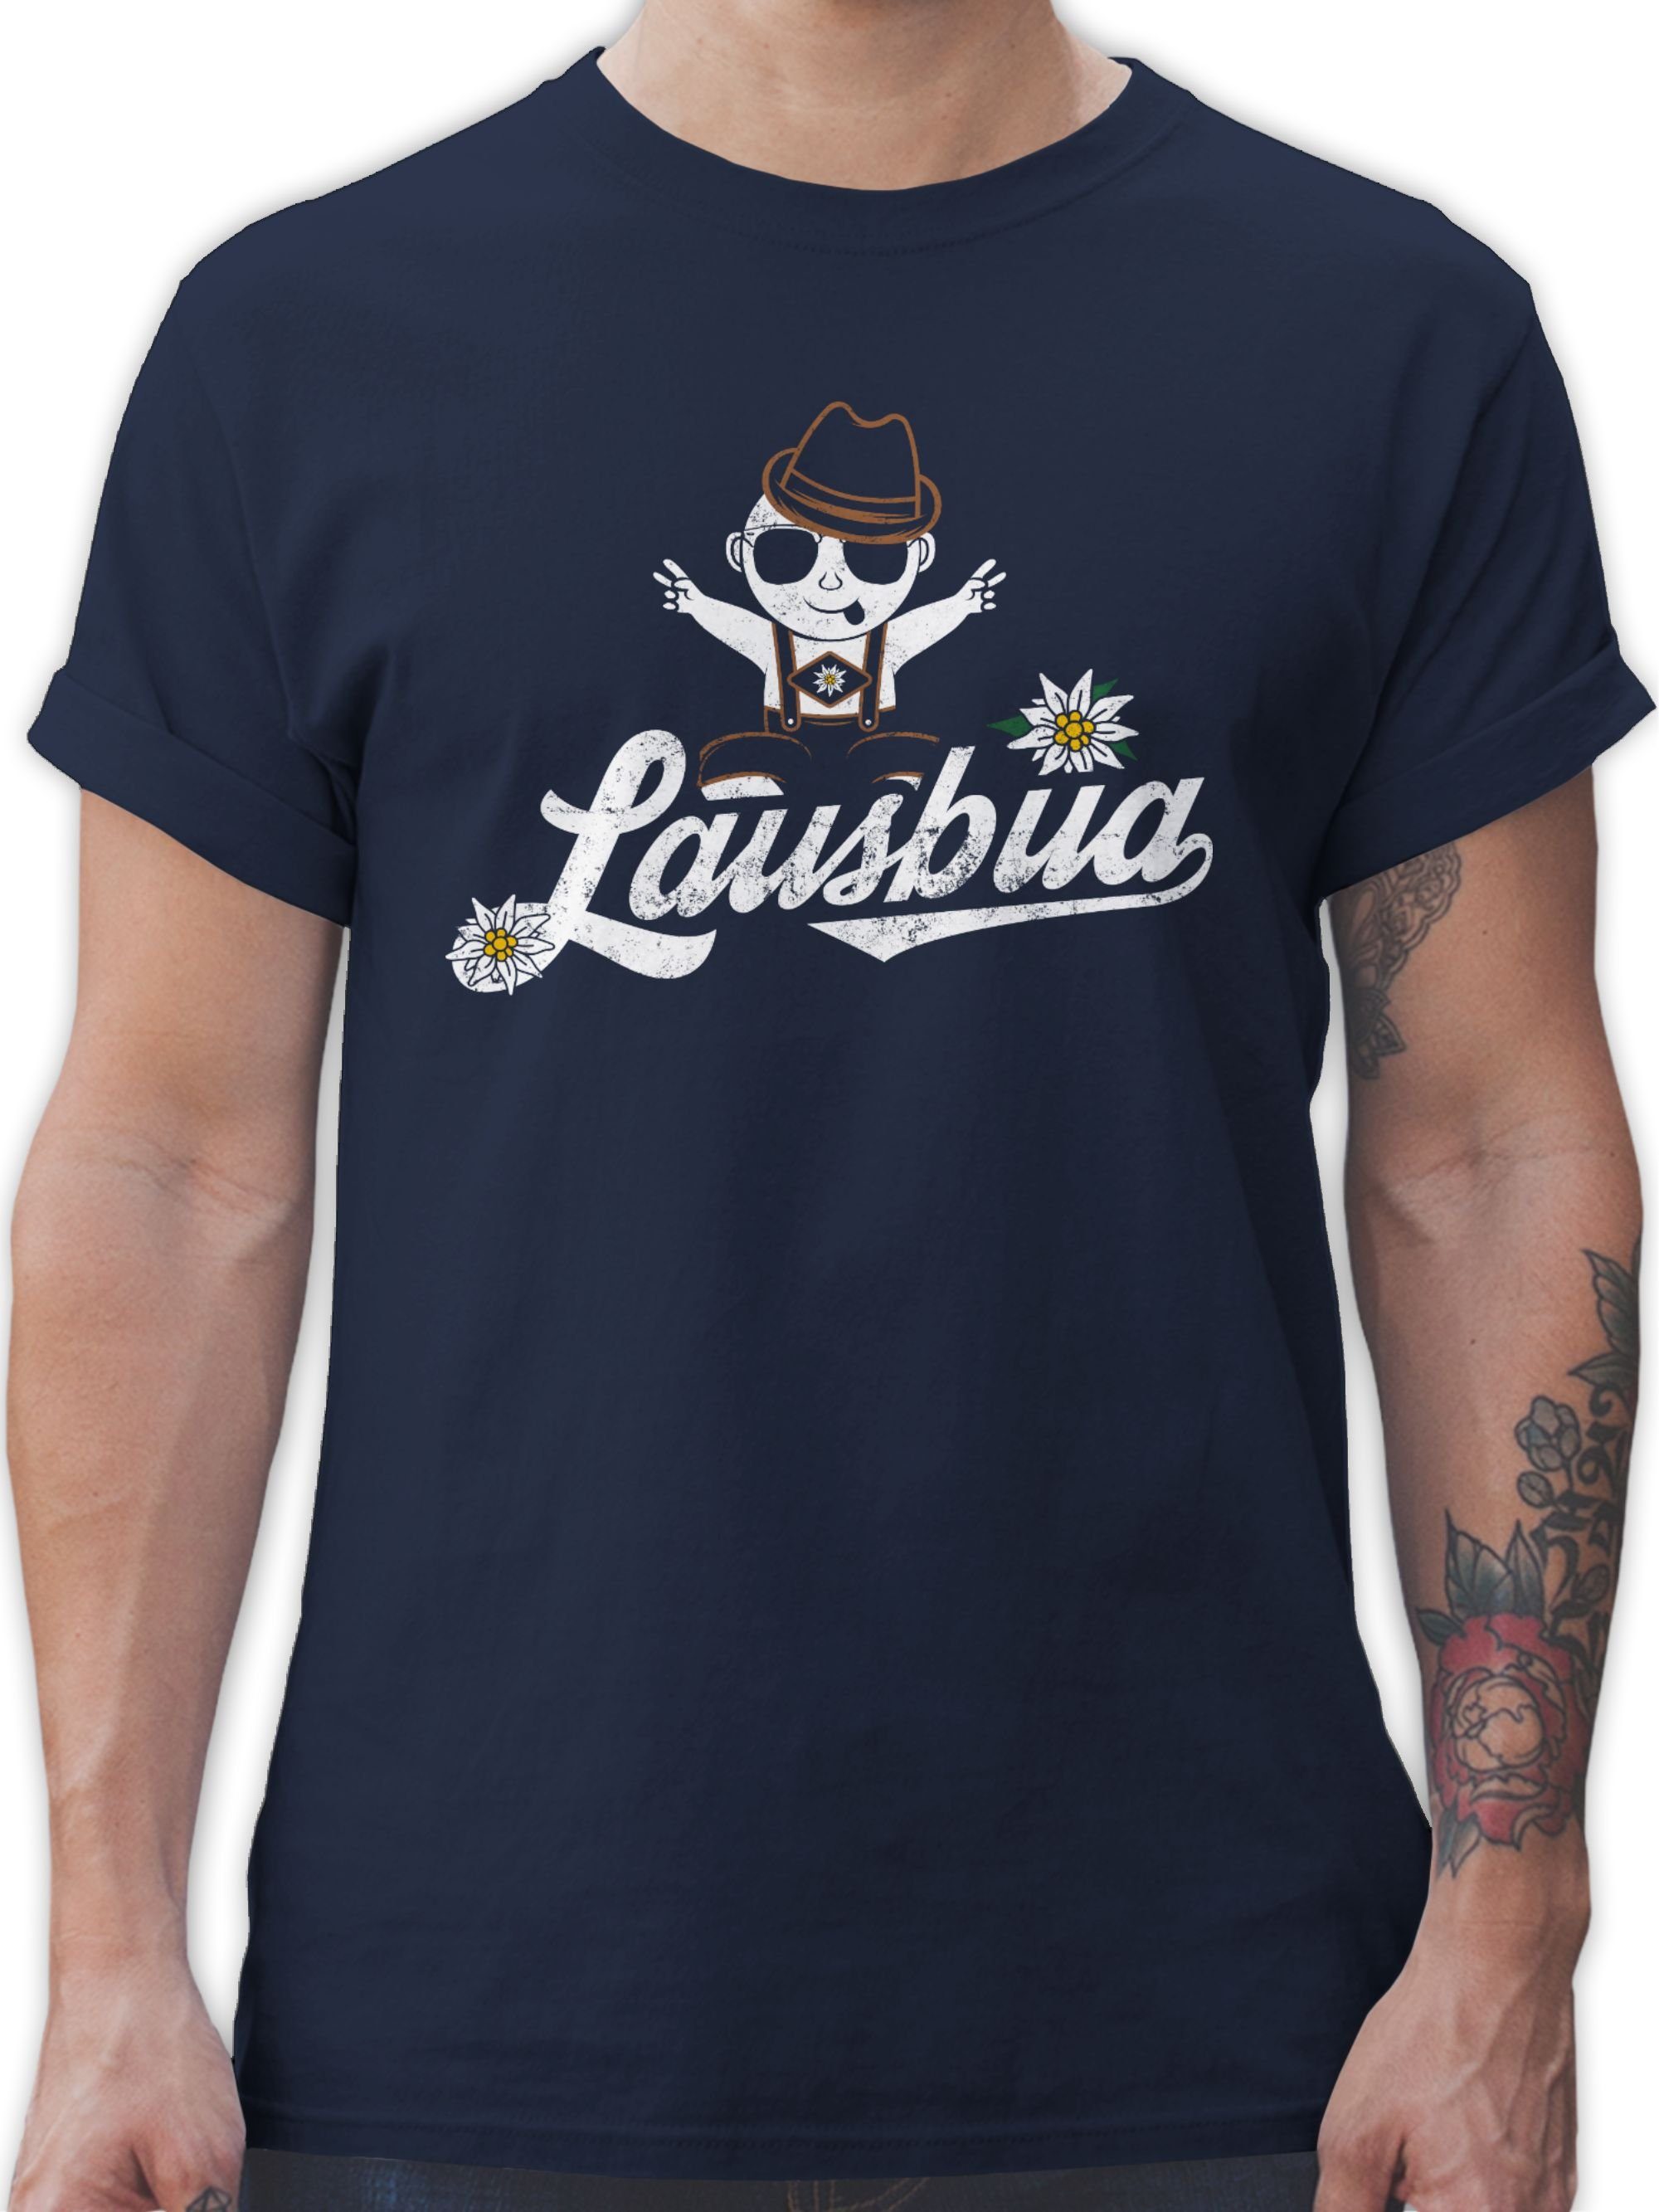 Shirtracer T-Shirt Lausbua Lustig Herren 03 Wiesn Blau Witzig Navy Oktoberfest Mode I Baby für